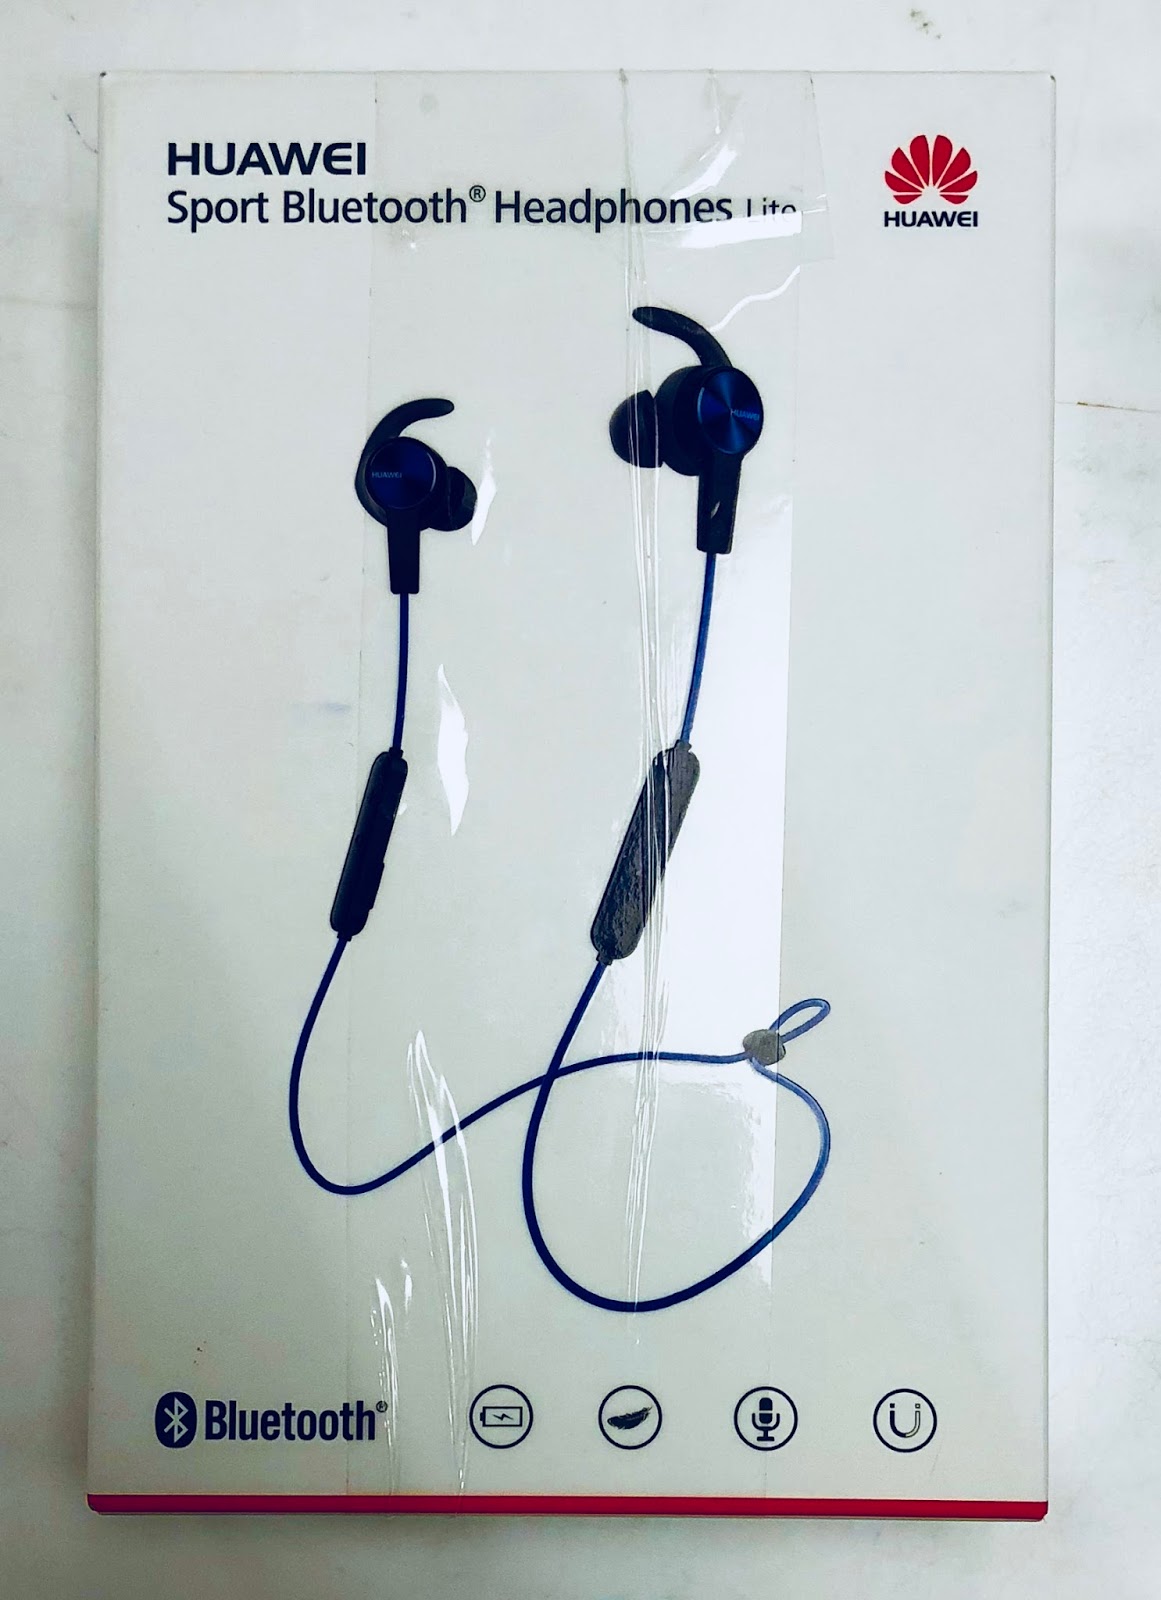 Best Phone Headphones - Huawei Sport Bluetooth Headphones Lite AM61 Review Ceddy's Random